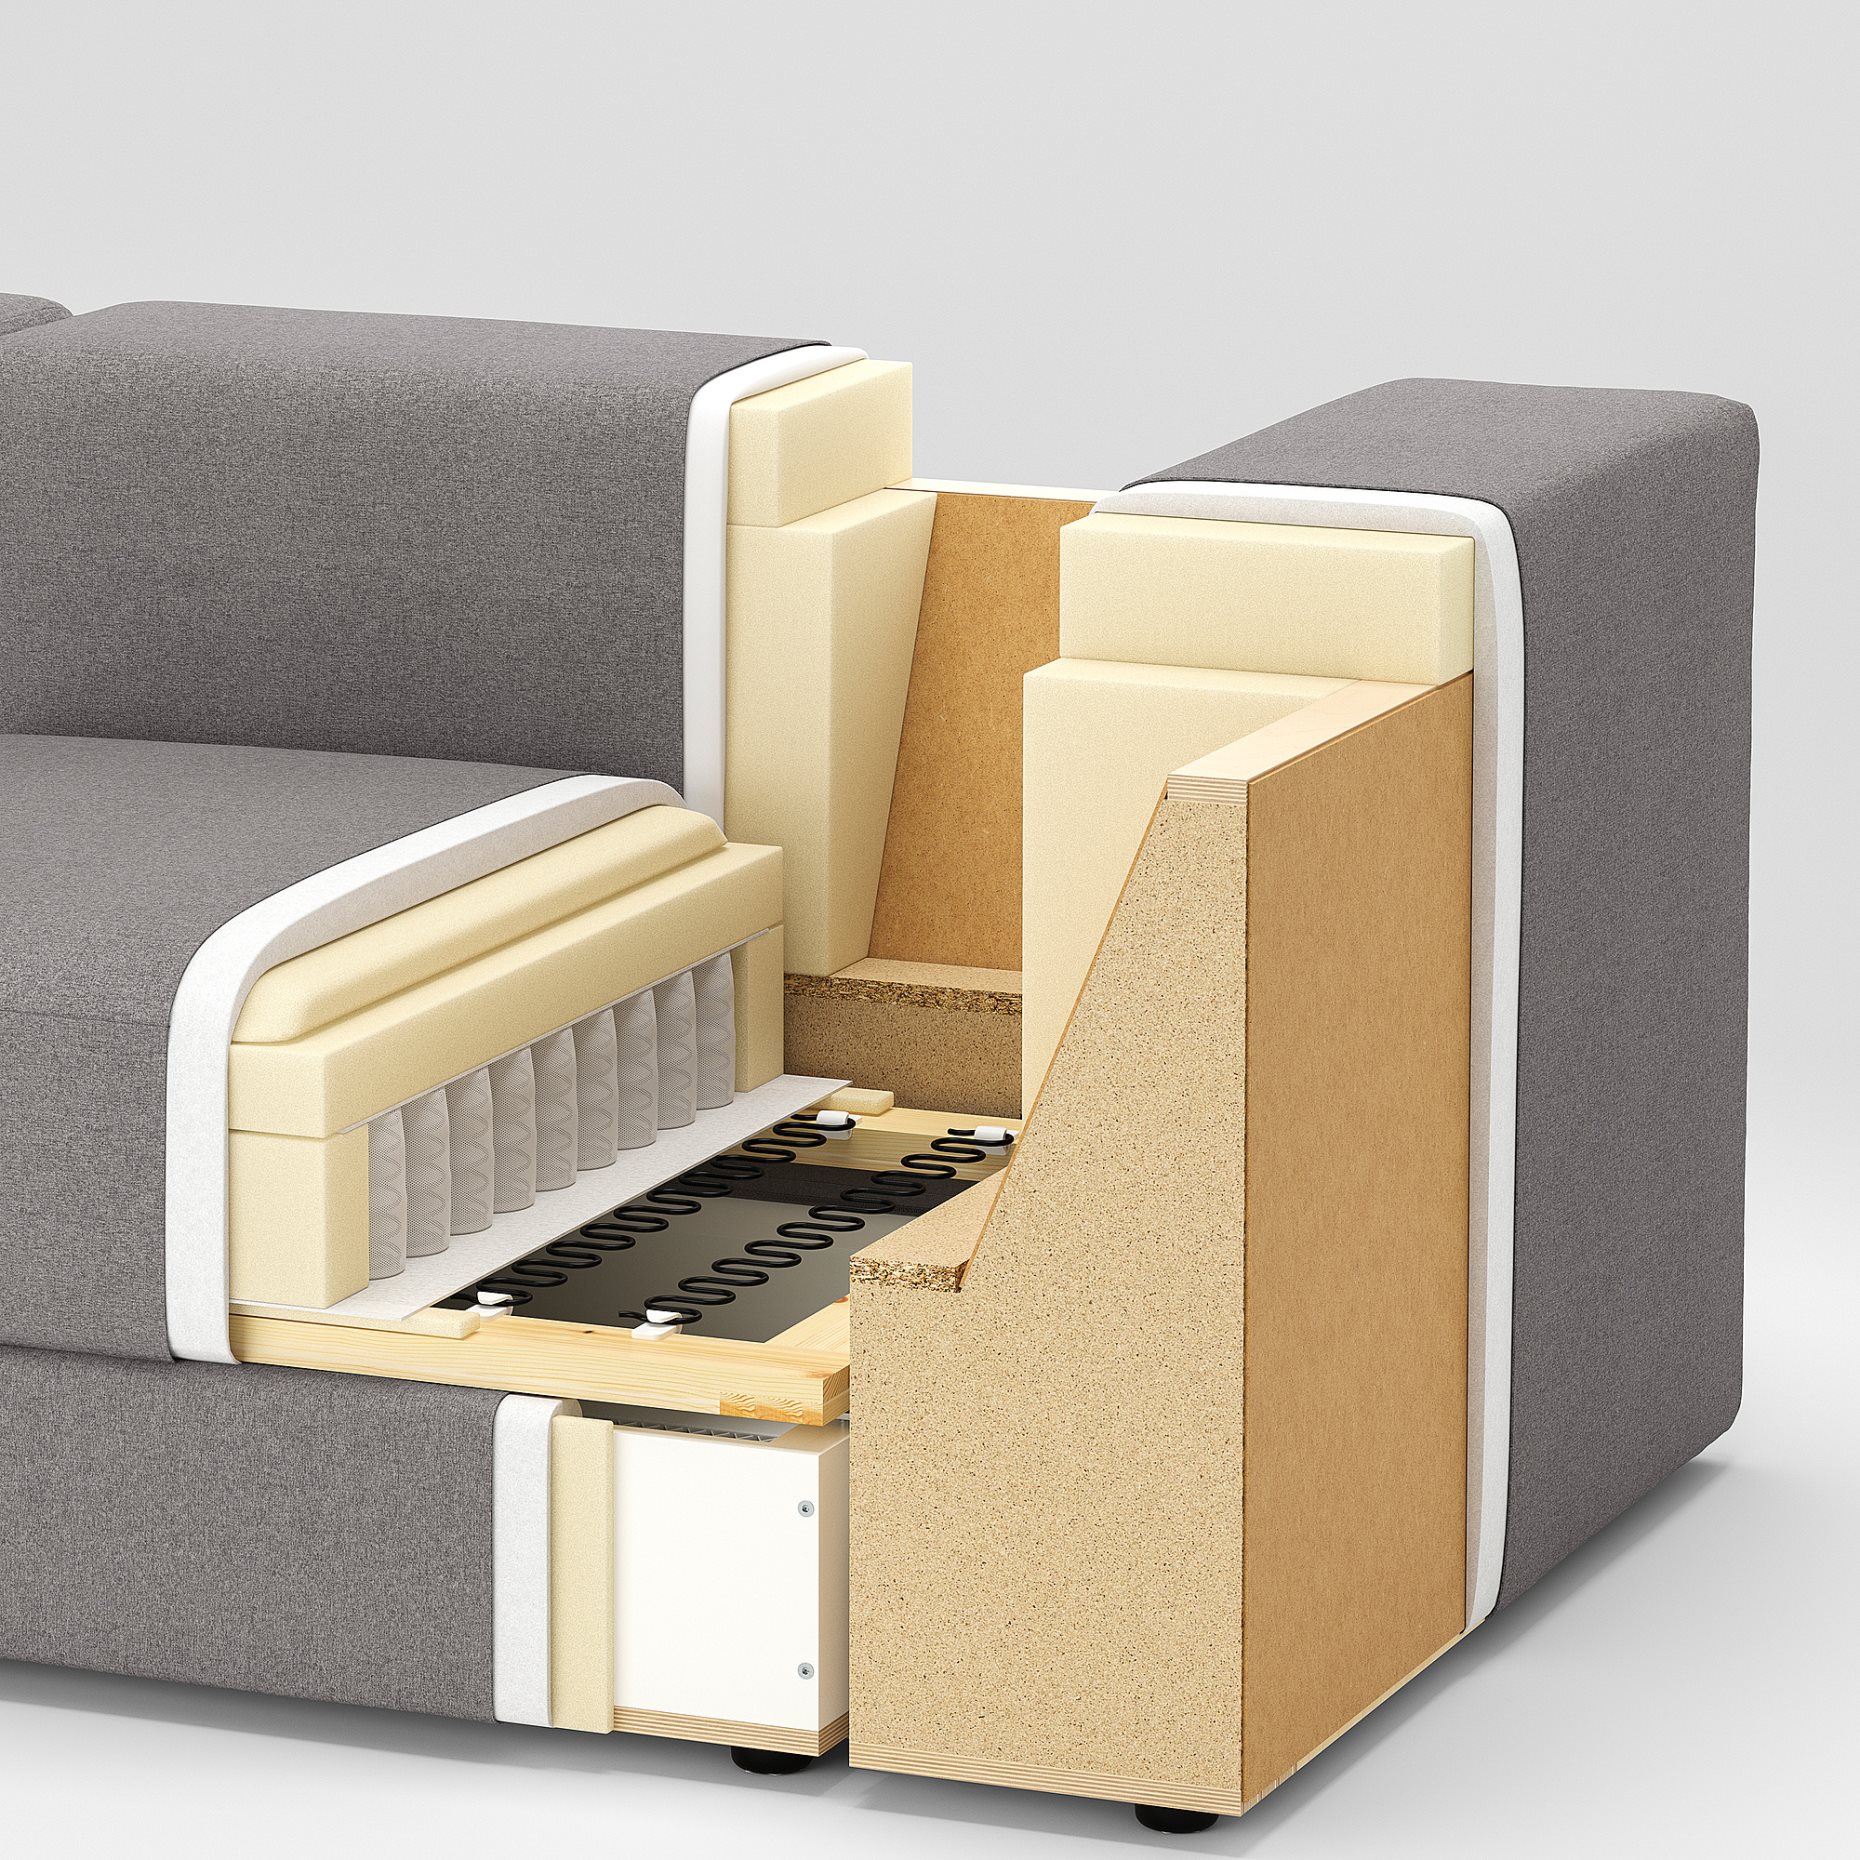 JÄTTEBO, 2,5 θέσιος καναπές με σεζλόνγκ/αριστερό με κεφαλάρι, 794.900.91